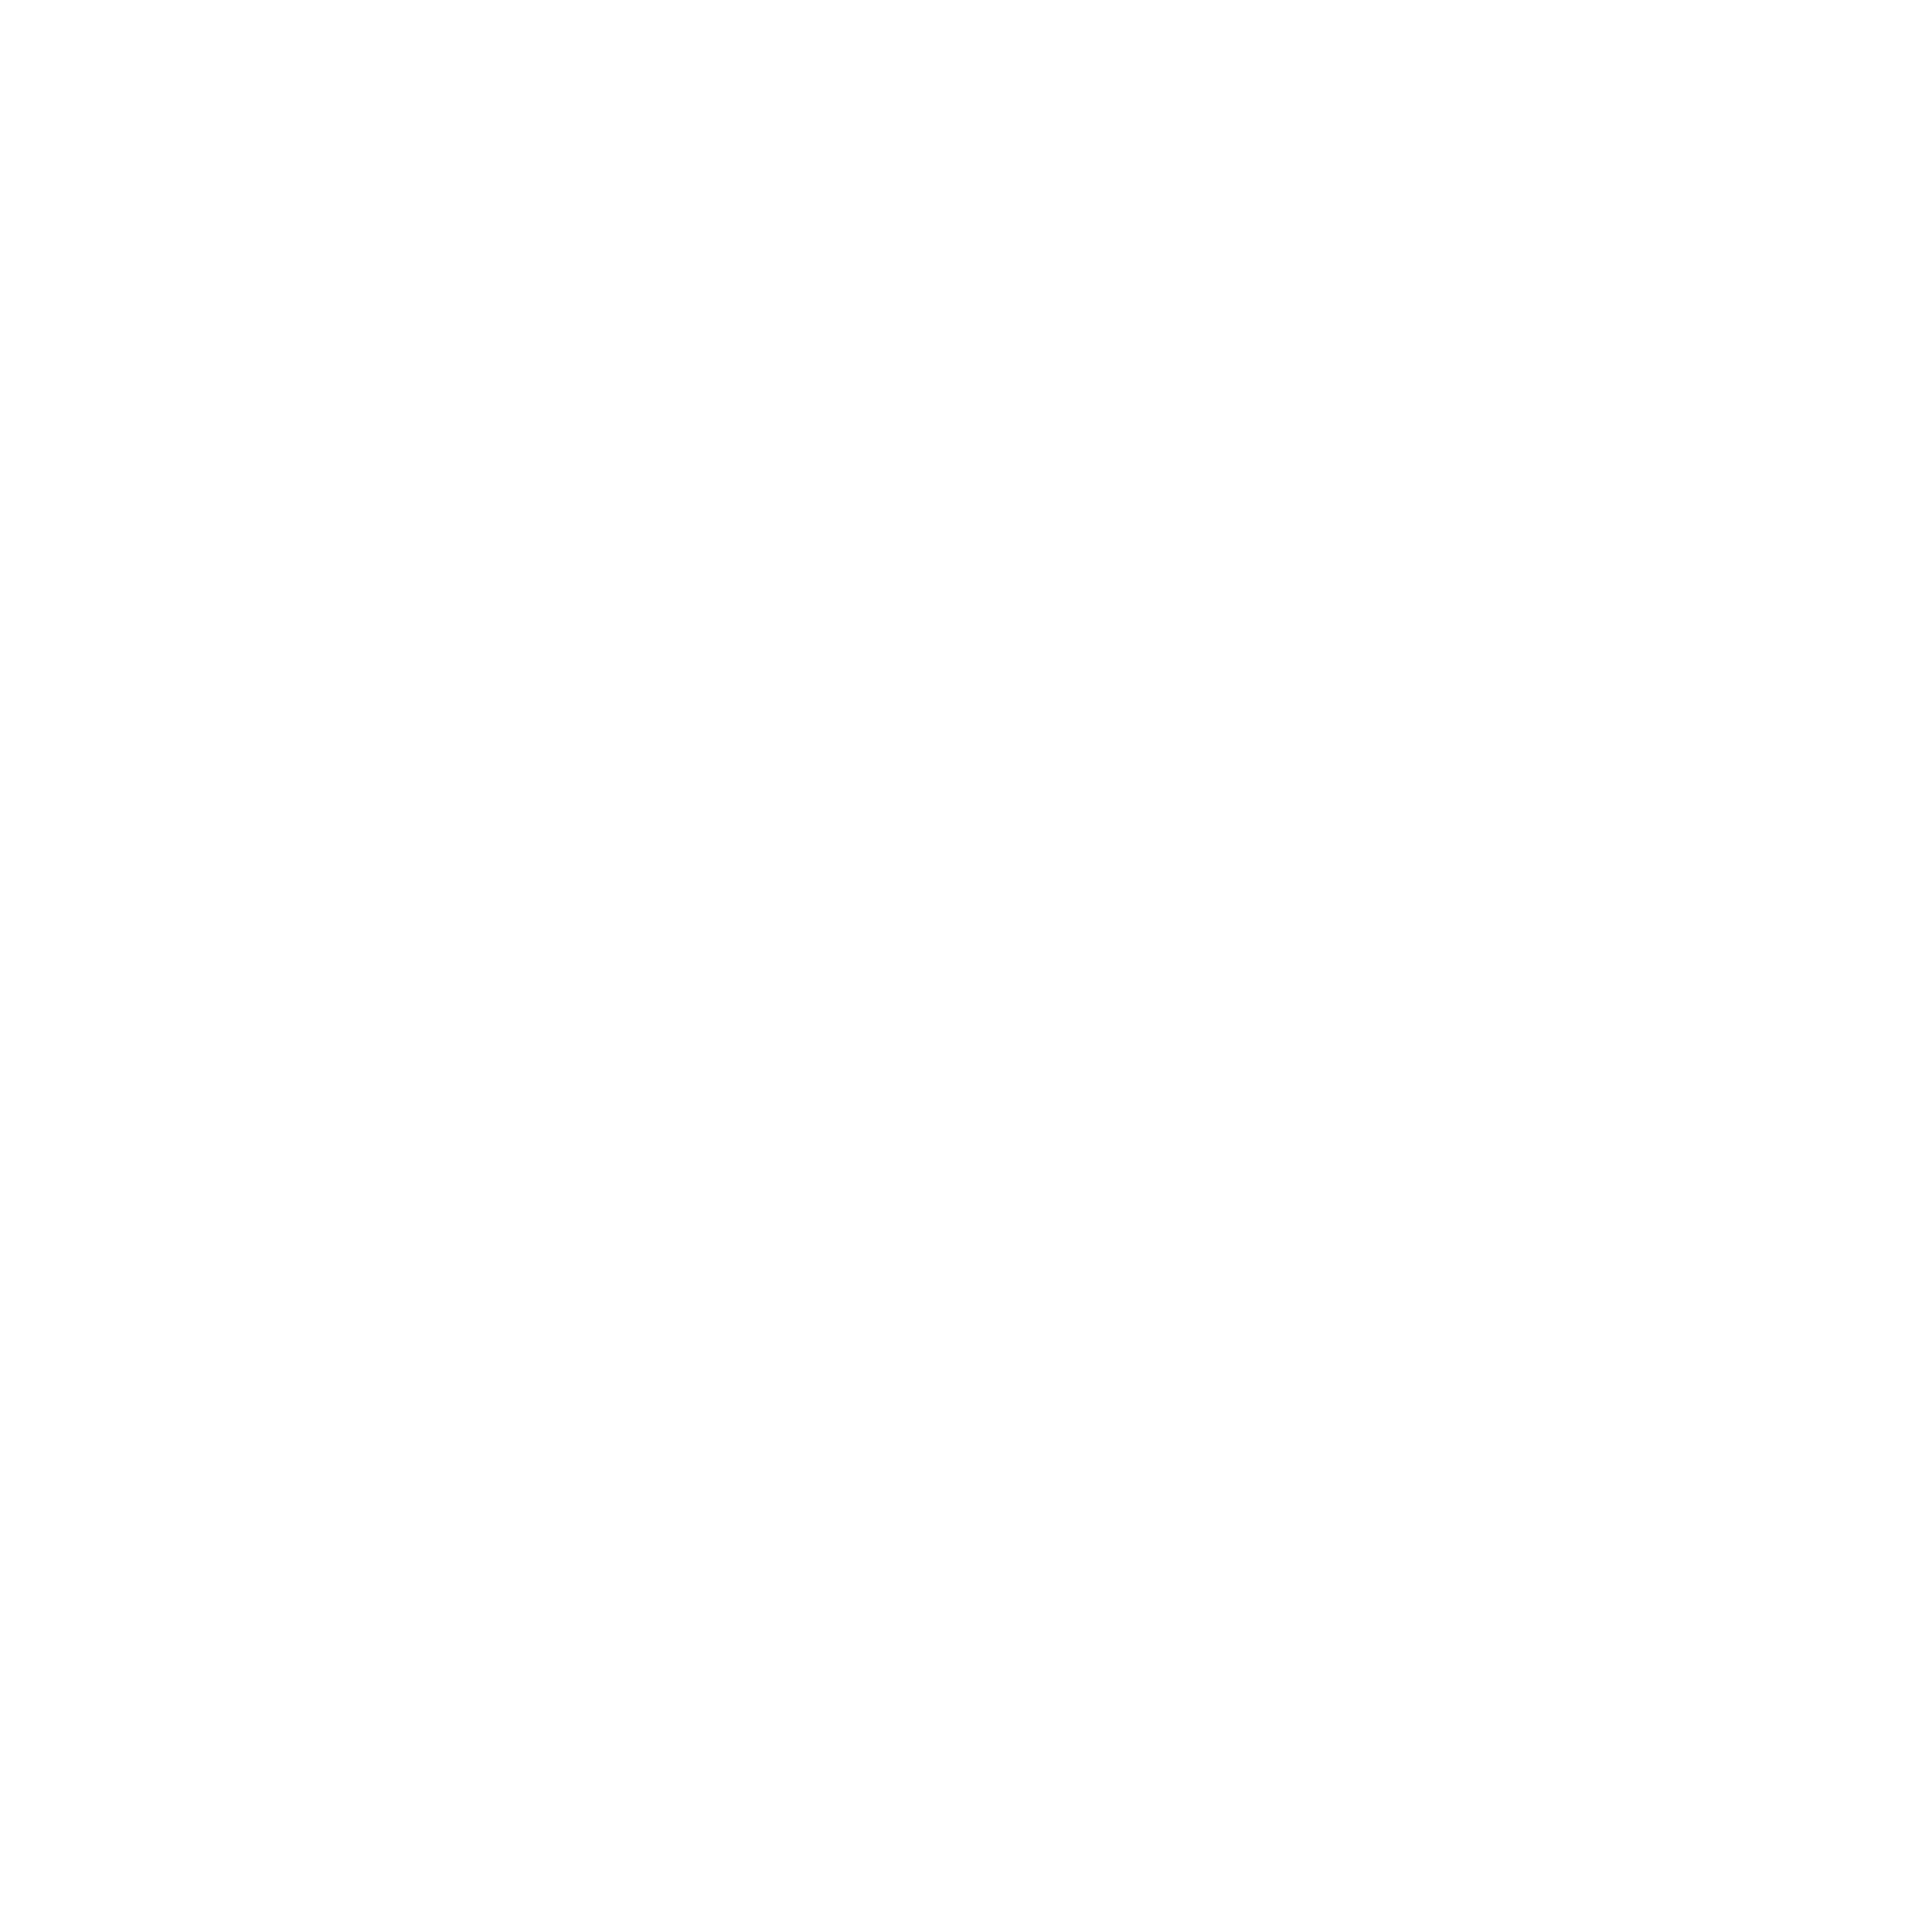 Tidal Bar logo